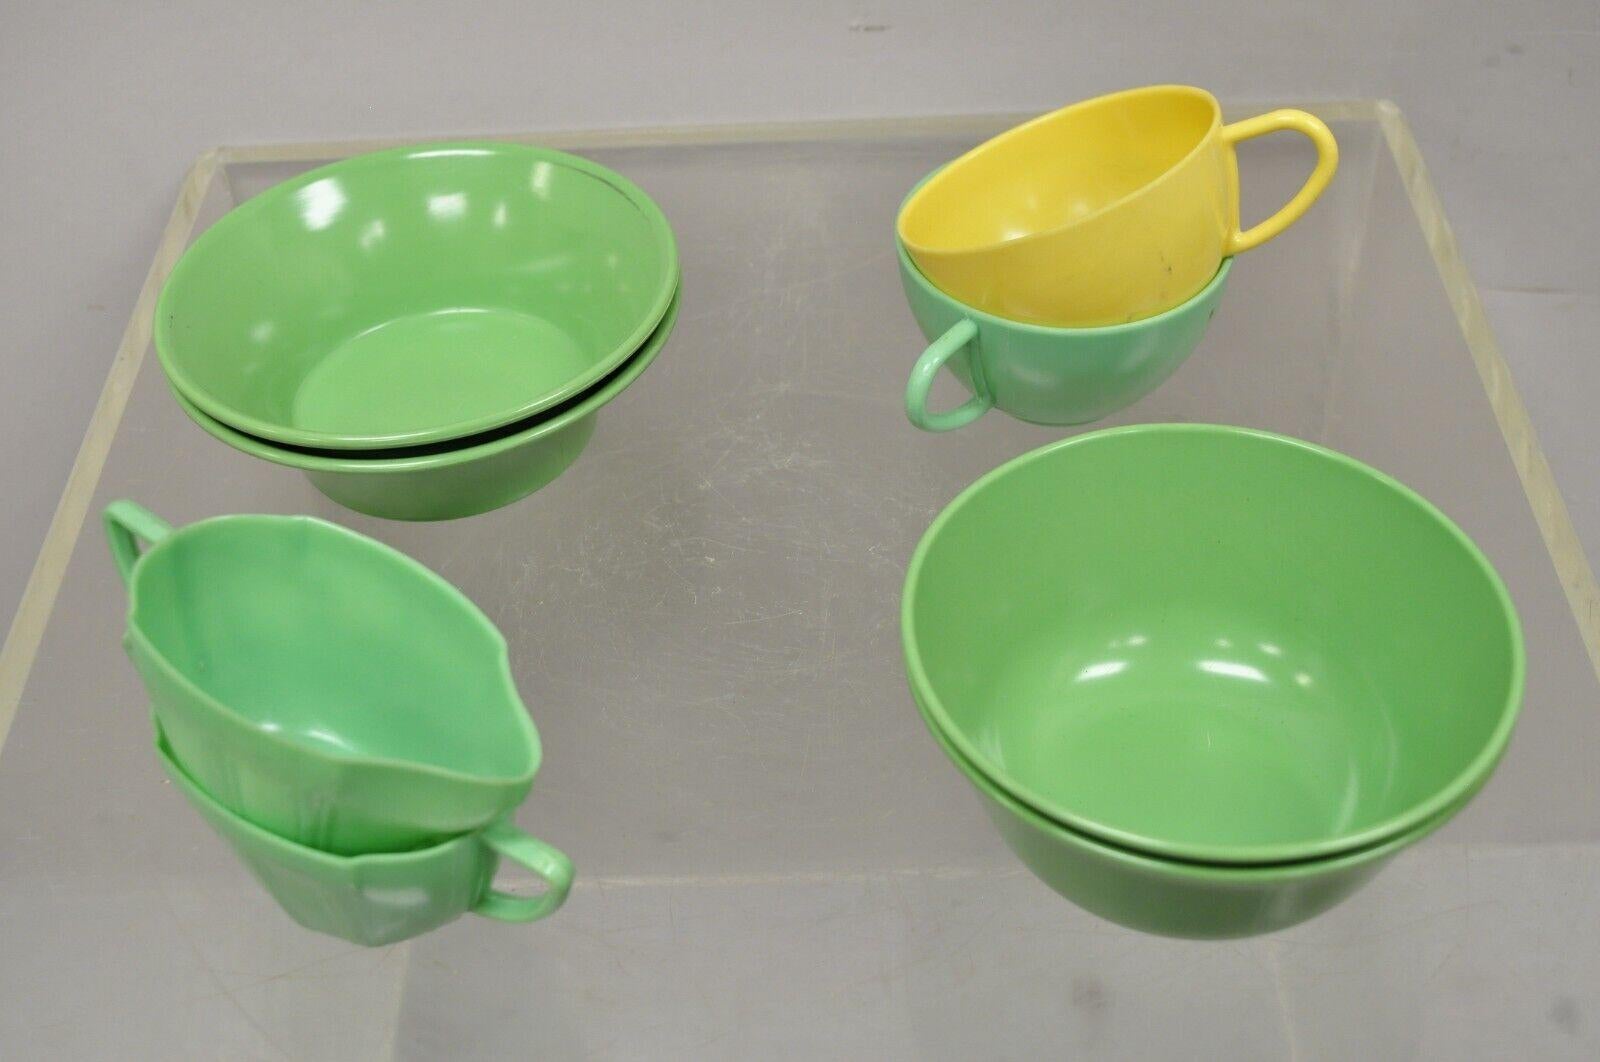 Vintage Art Deco green & yellow Bonny Ware Safetyware bowl set - 8 Pc set. Item features (4) Green 